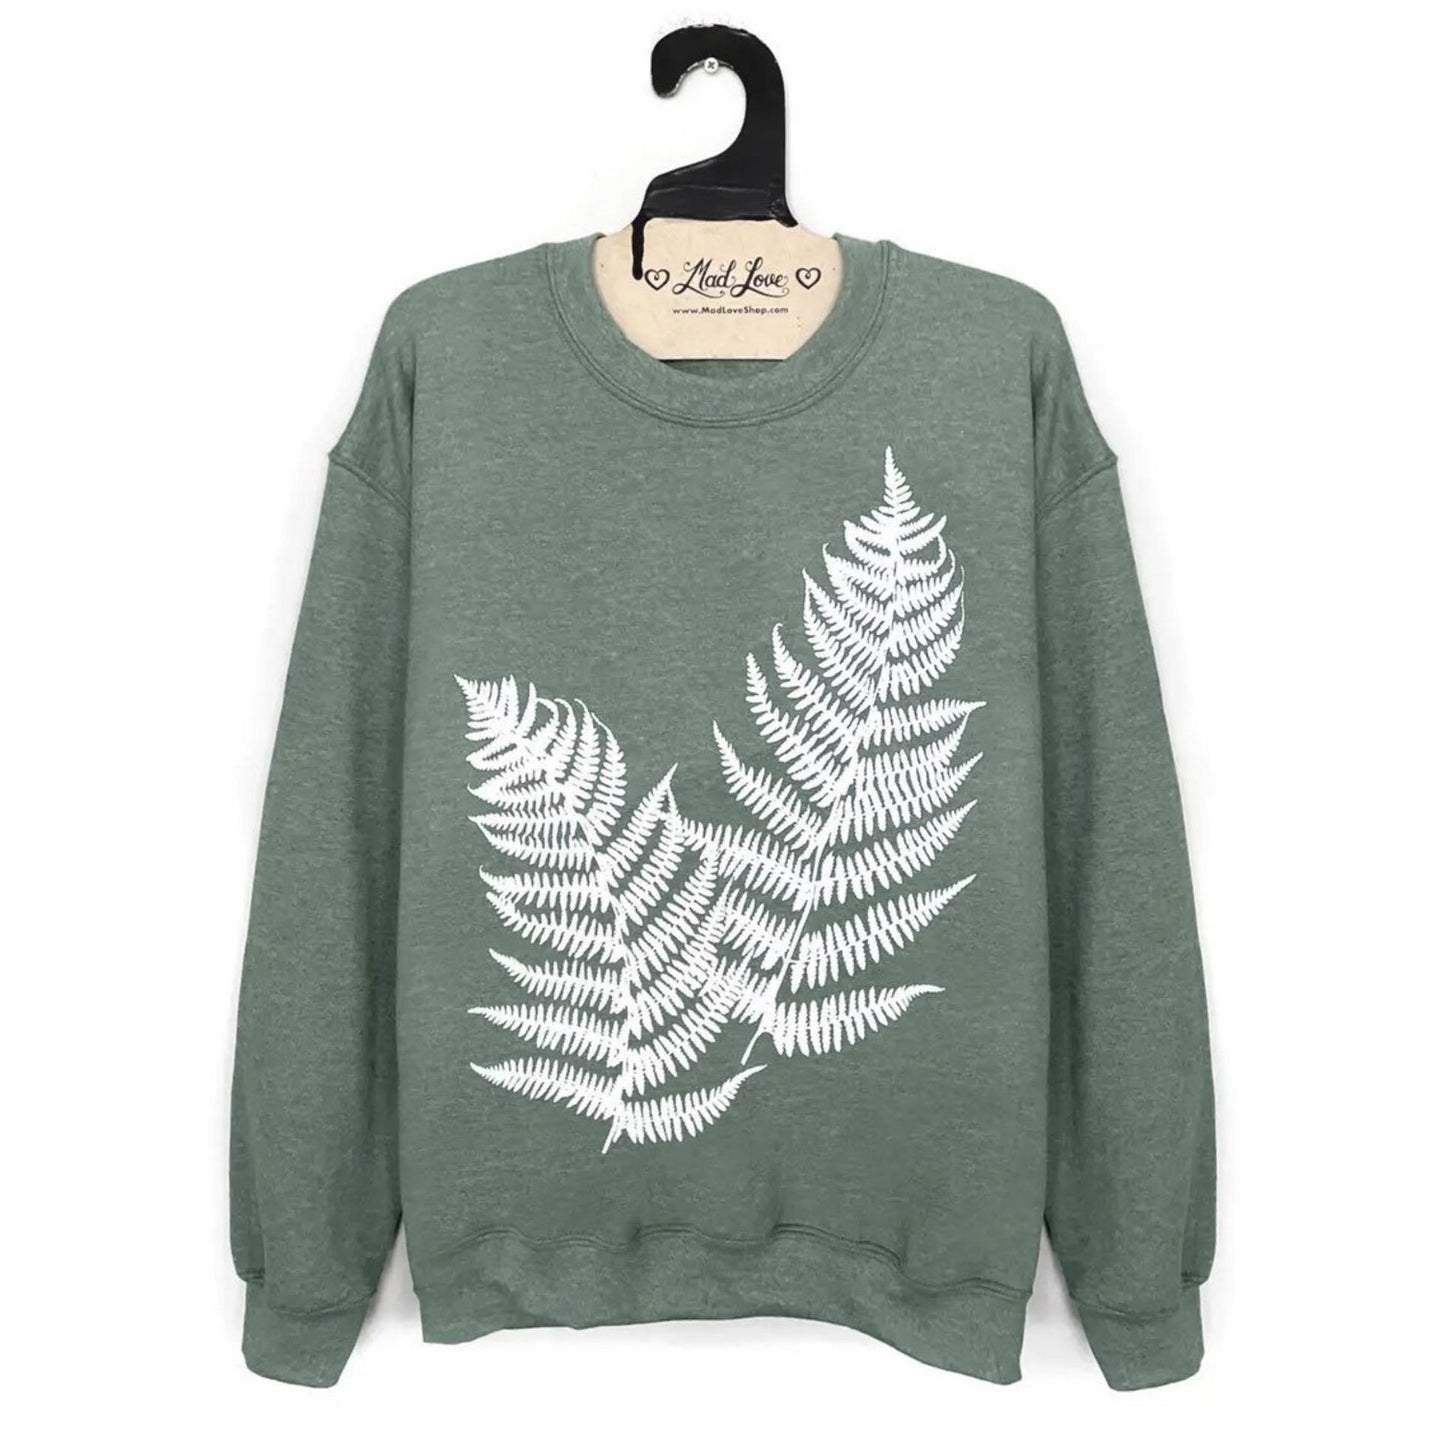 Mad Love Unisex Heather Green Fleece Sweatshirt with Ferns - Small